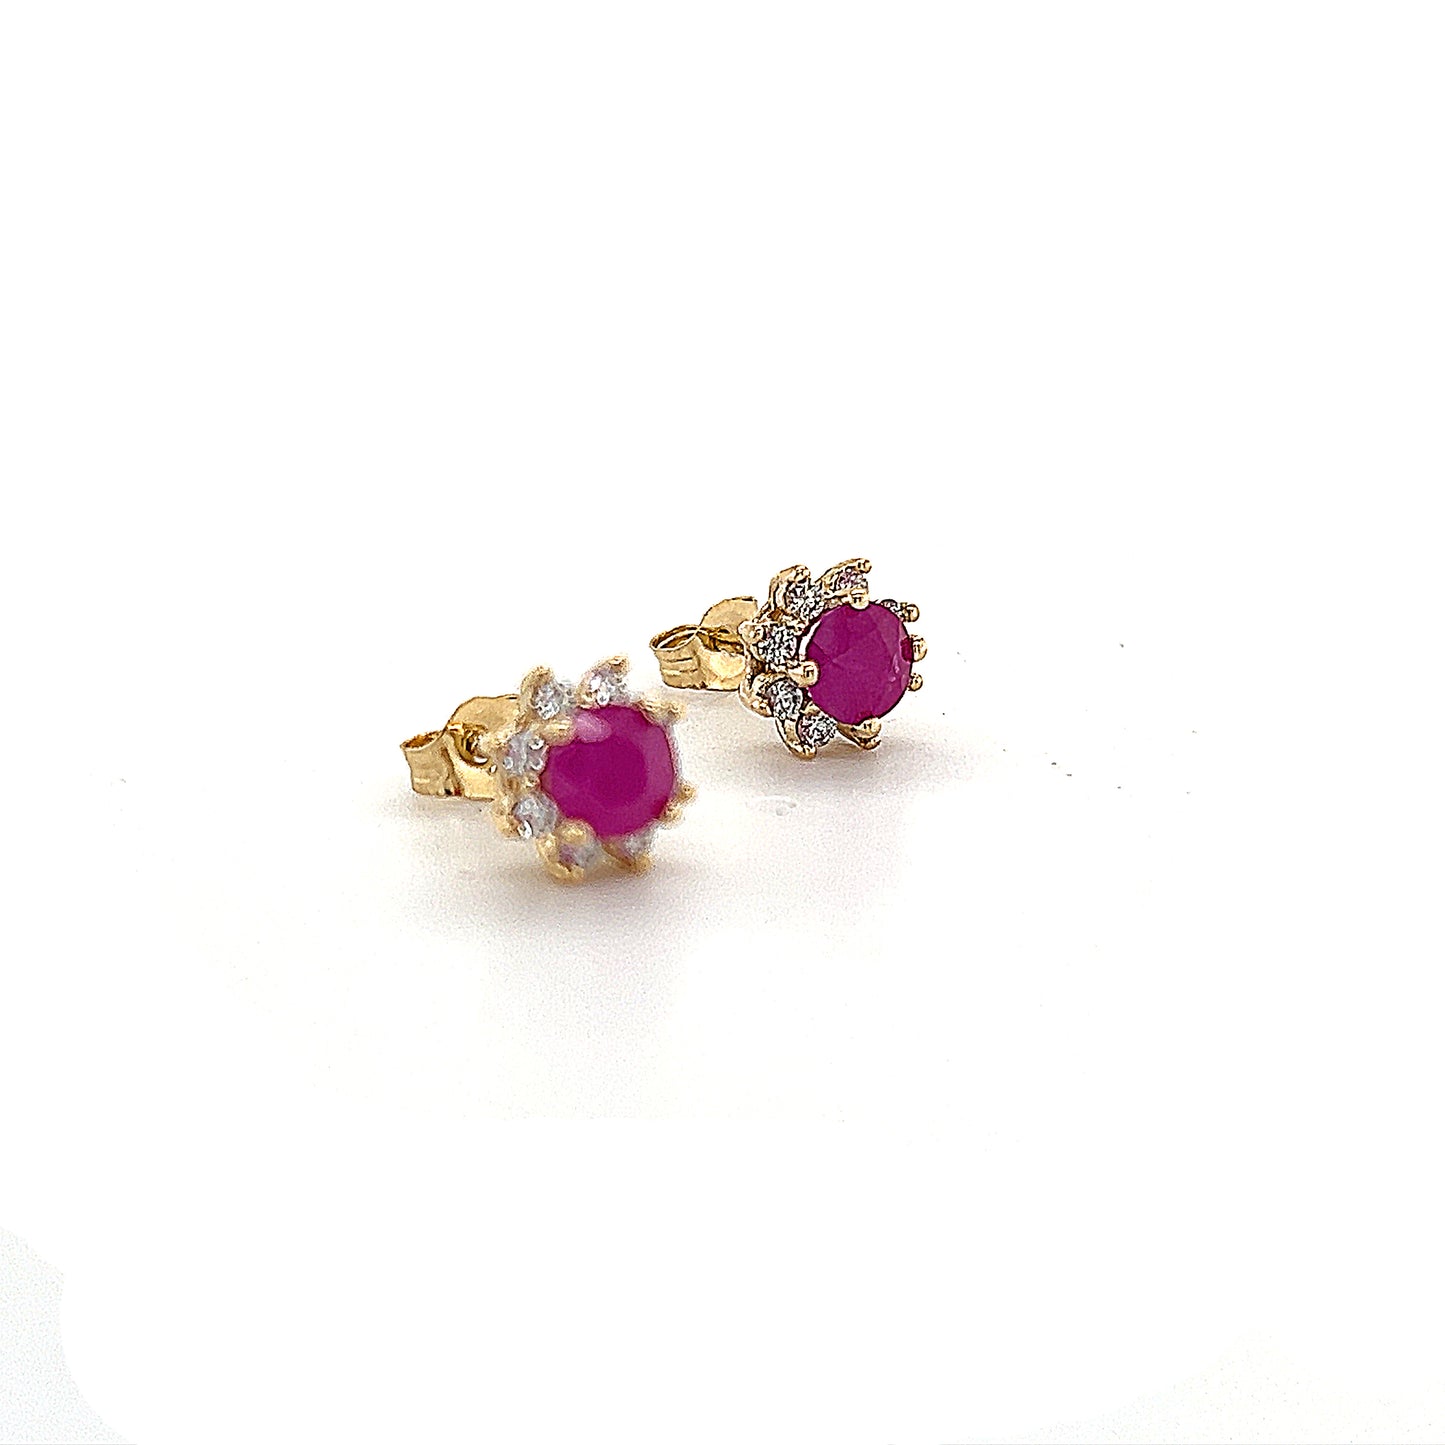 Natural Ruby Diamond Earrings 14k Gold 1.25 TCW Certified $2,290 210748 - Certified Estate Jewelry